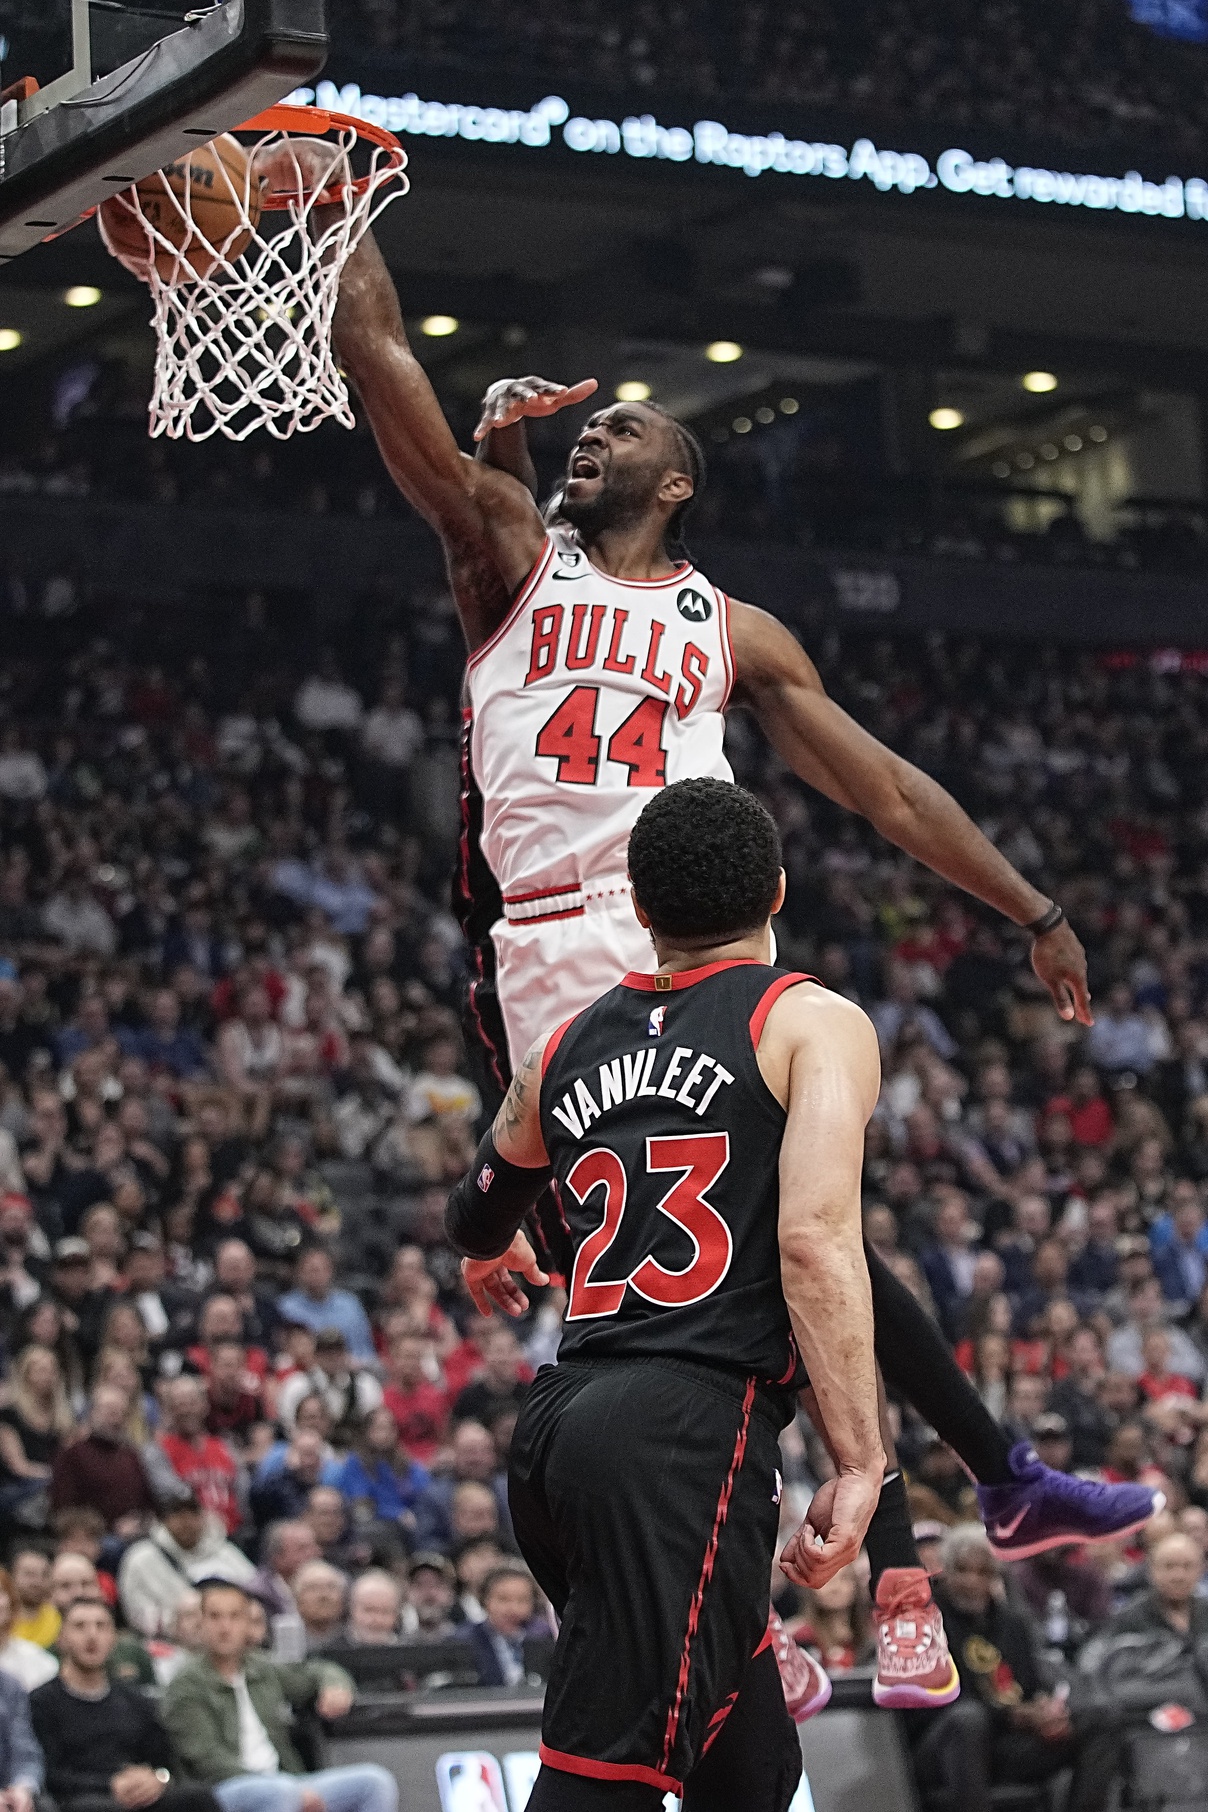 Basketball - Chicago Bulls